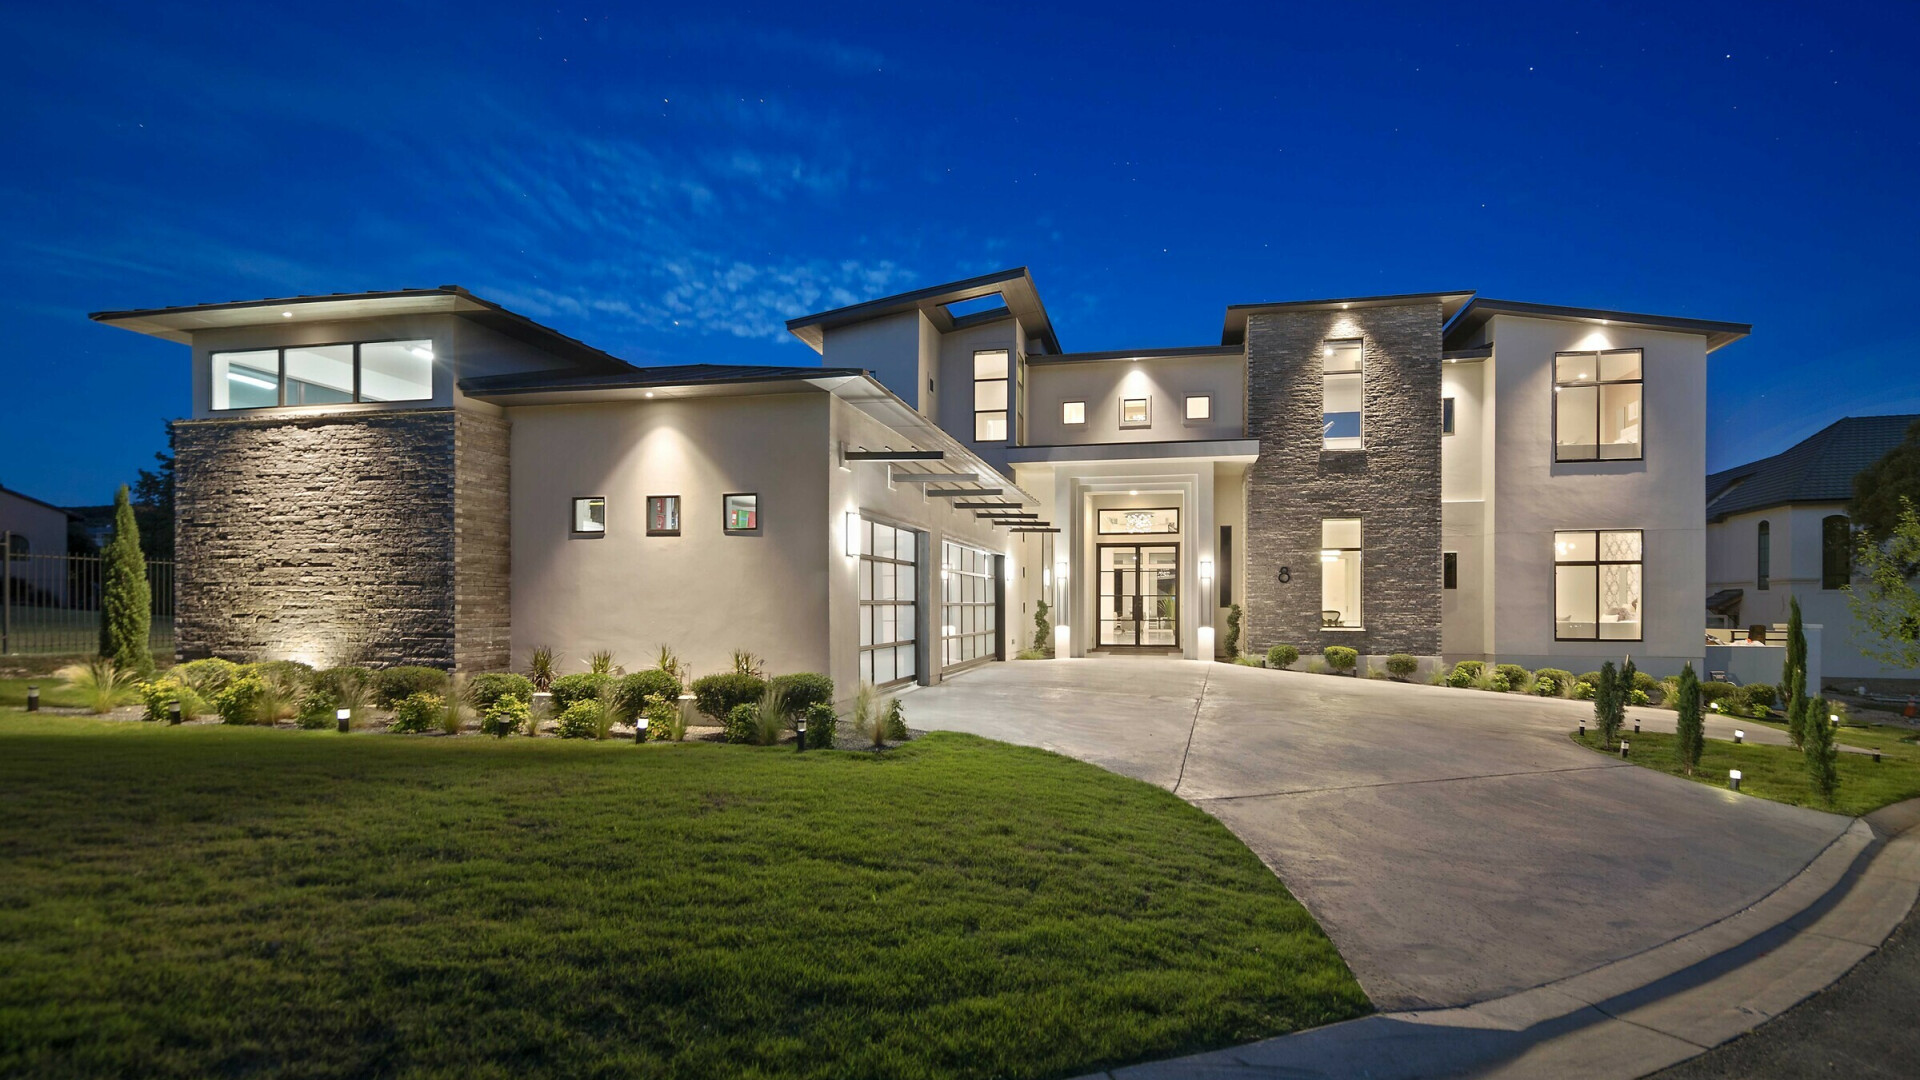 Front view of modern luxury home at twilight, San Antonio TX